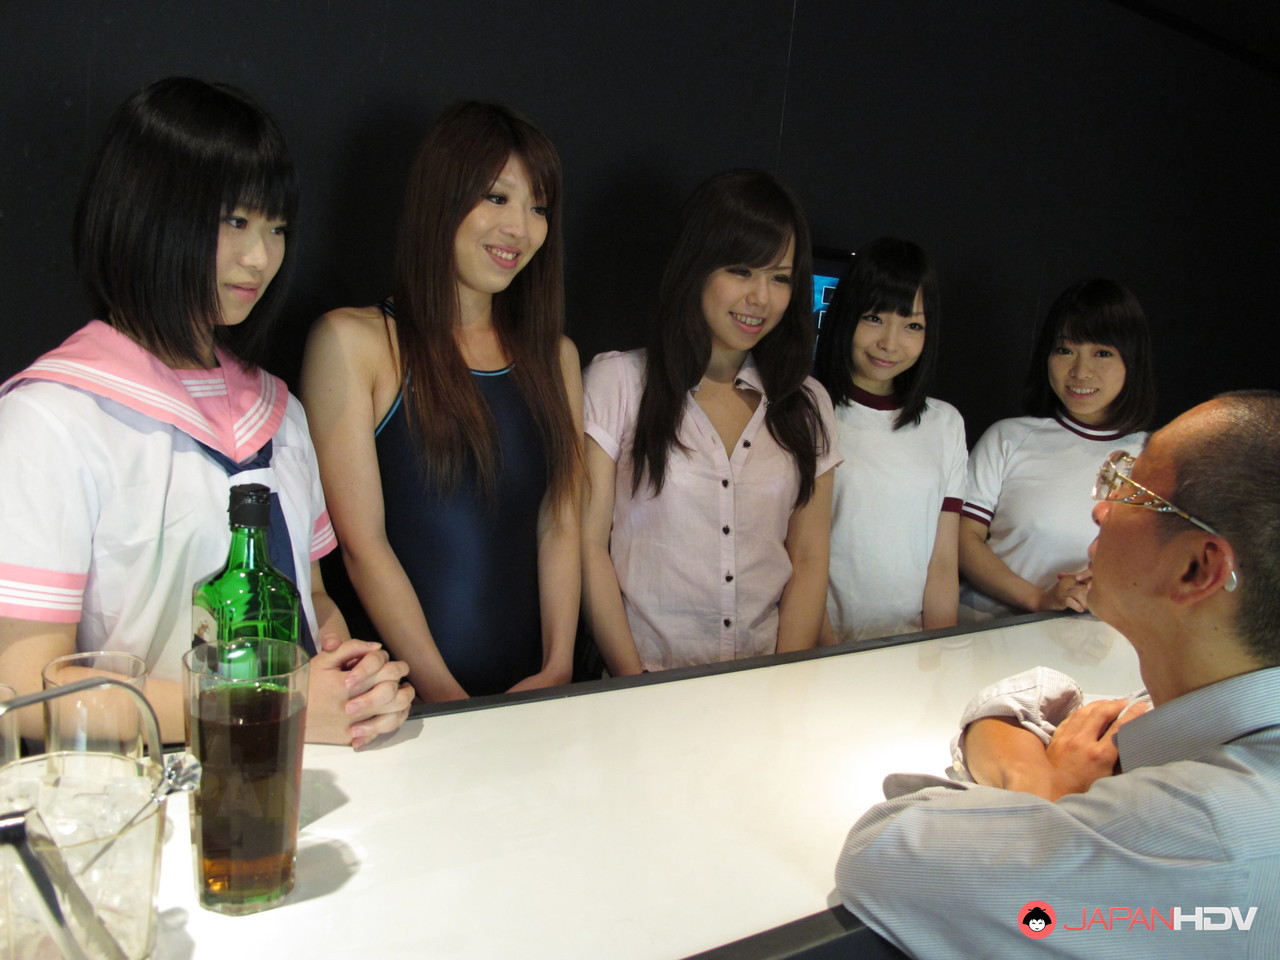 Cute Japanese teens participate in a wild Asian orgy in the nightclub porno fotky #424451908 | Japan HDV Pics, Mio Kosaki, Seiko Ida, Yuri Sakura, Japanese, mobilní porno